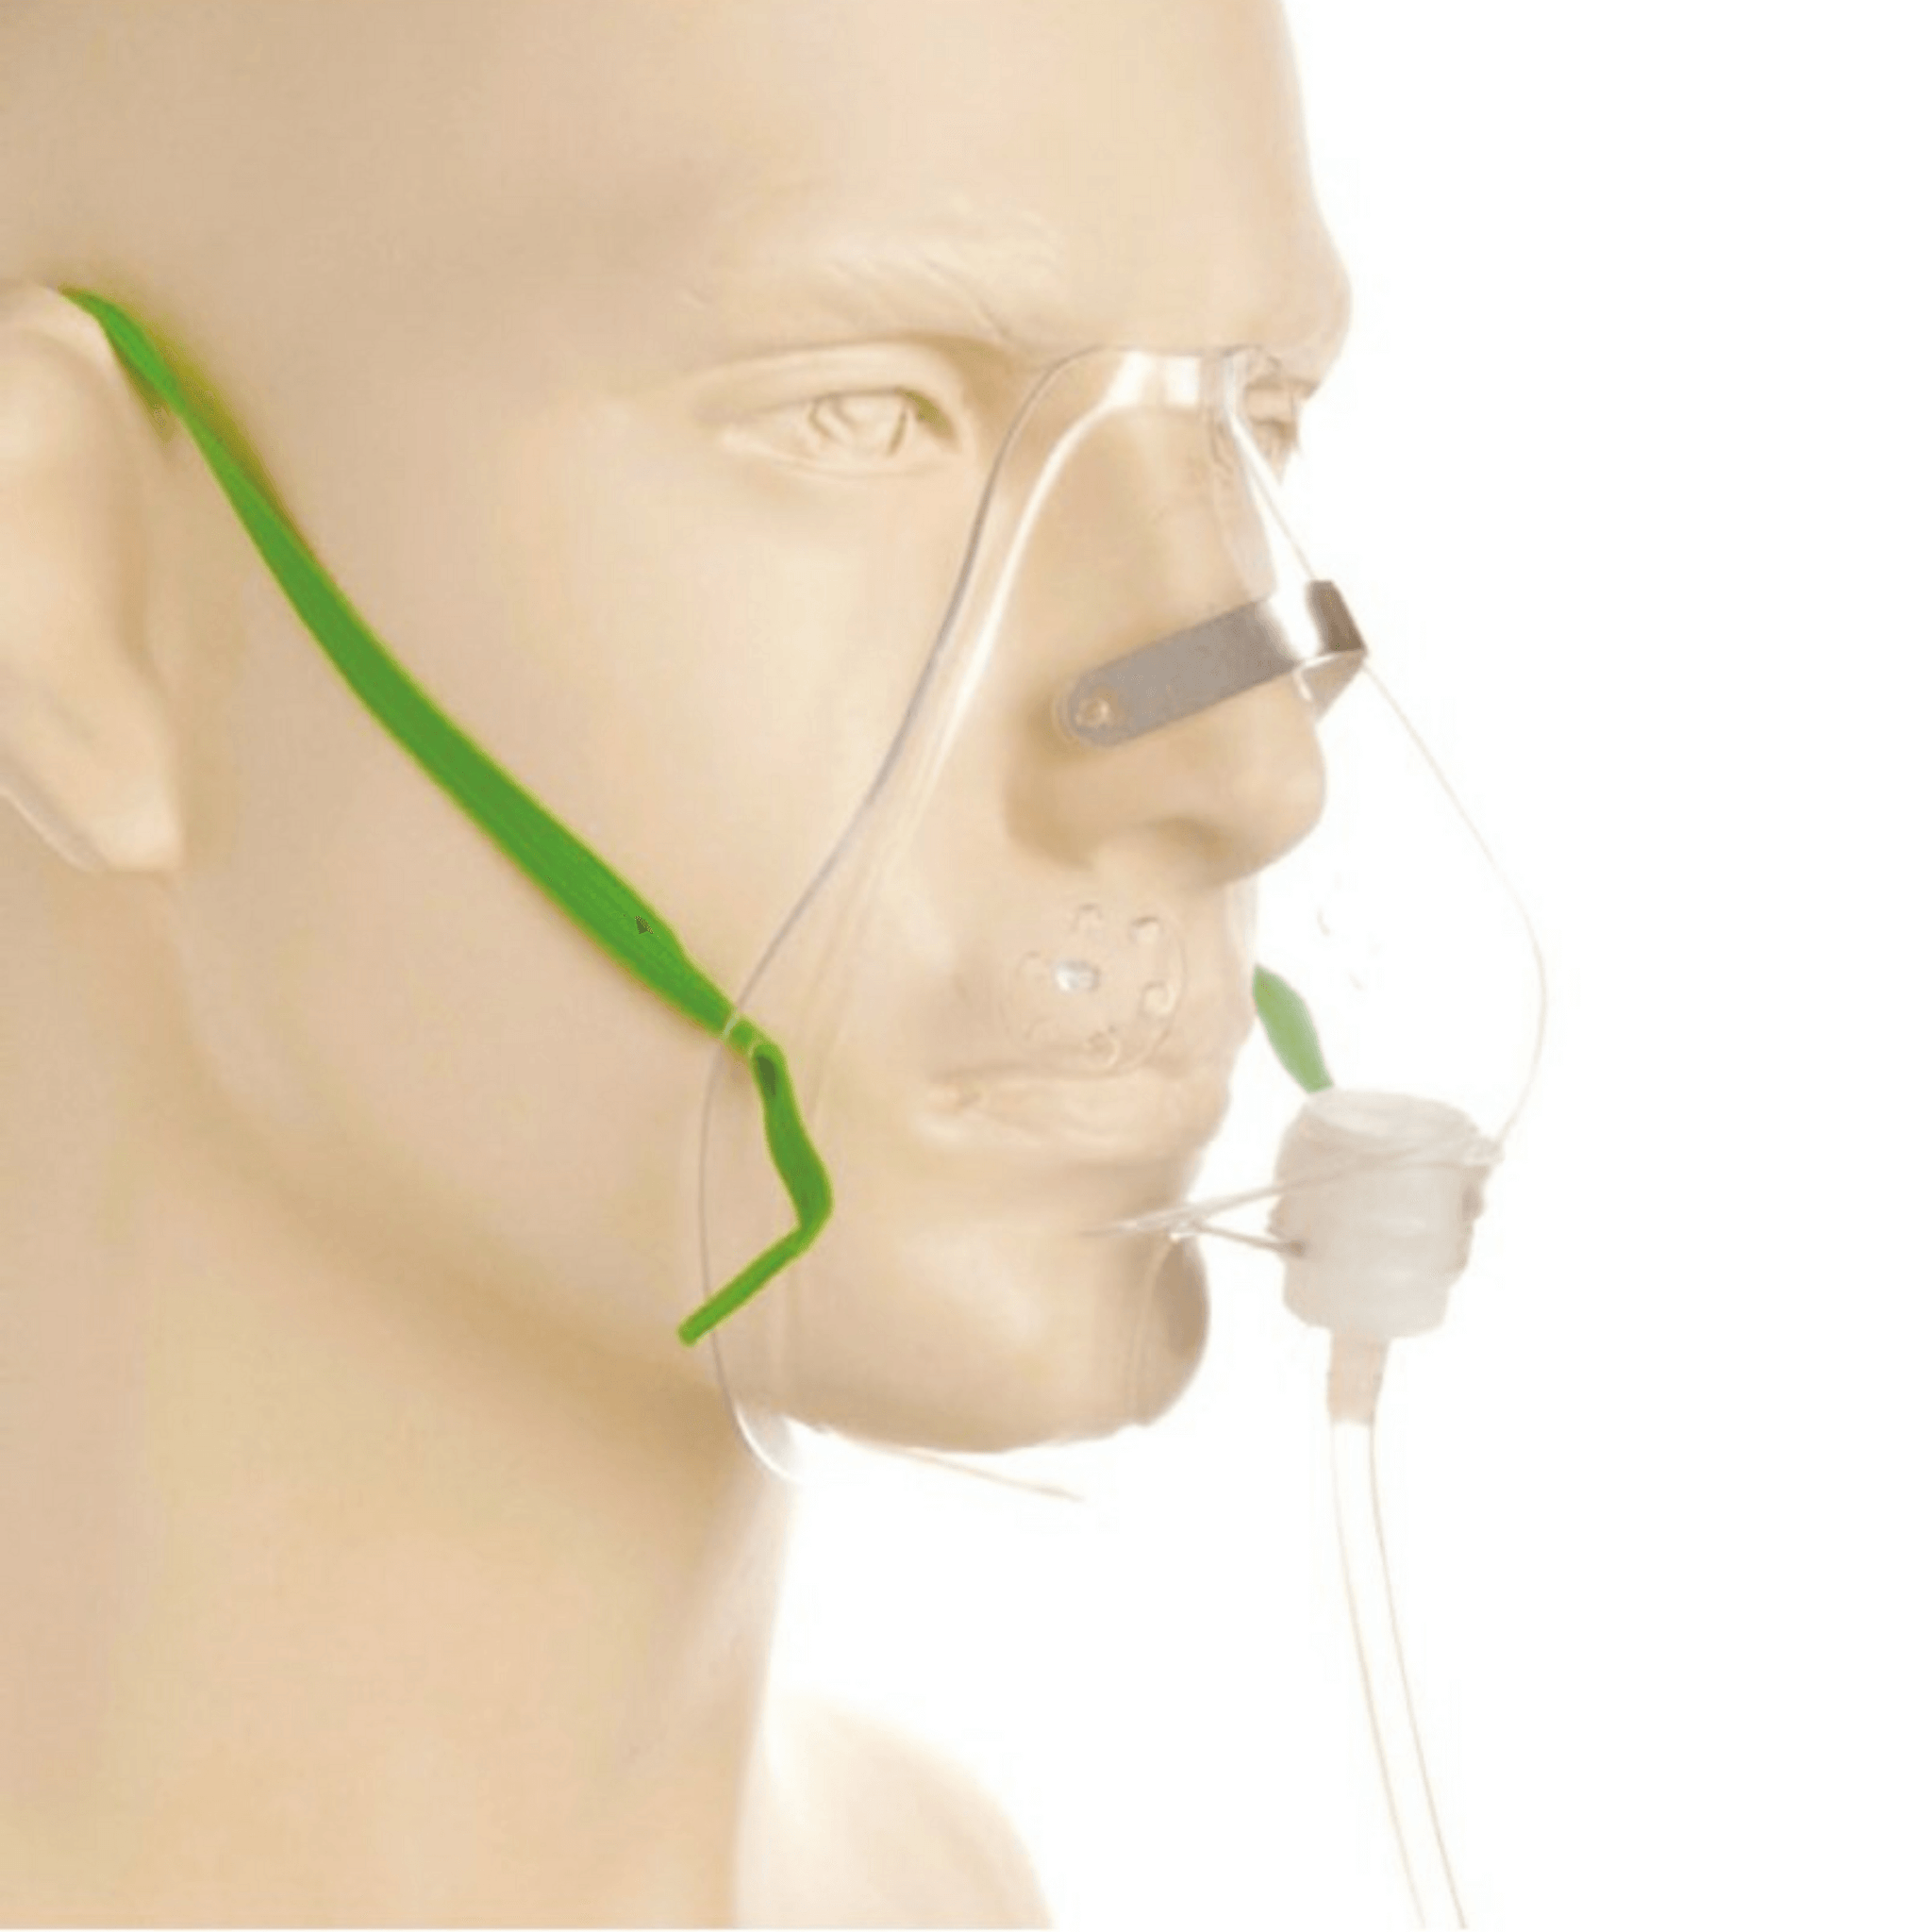 Oxygen Mask with Tube- Child